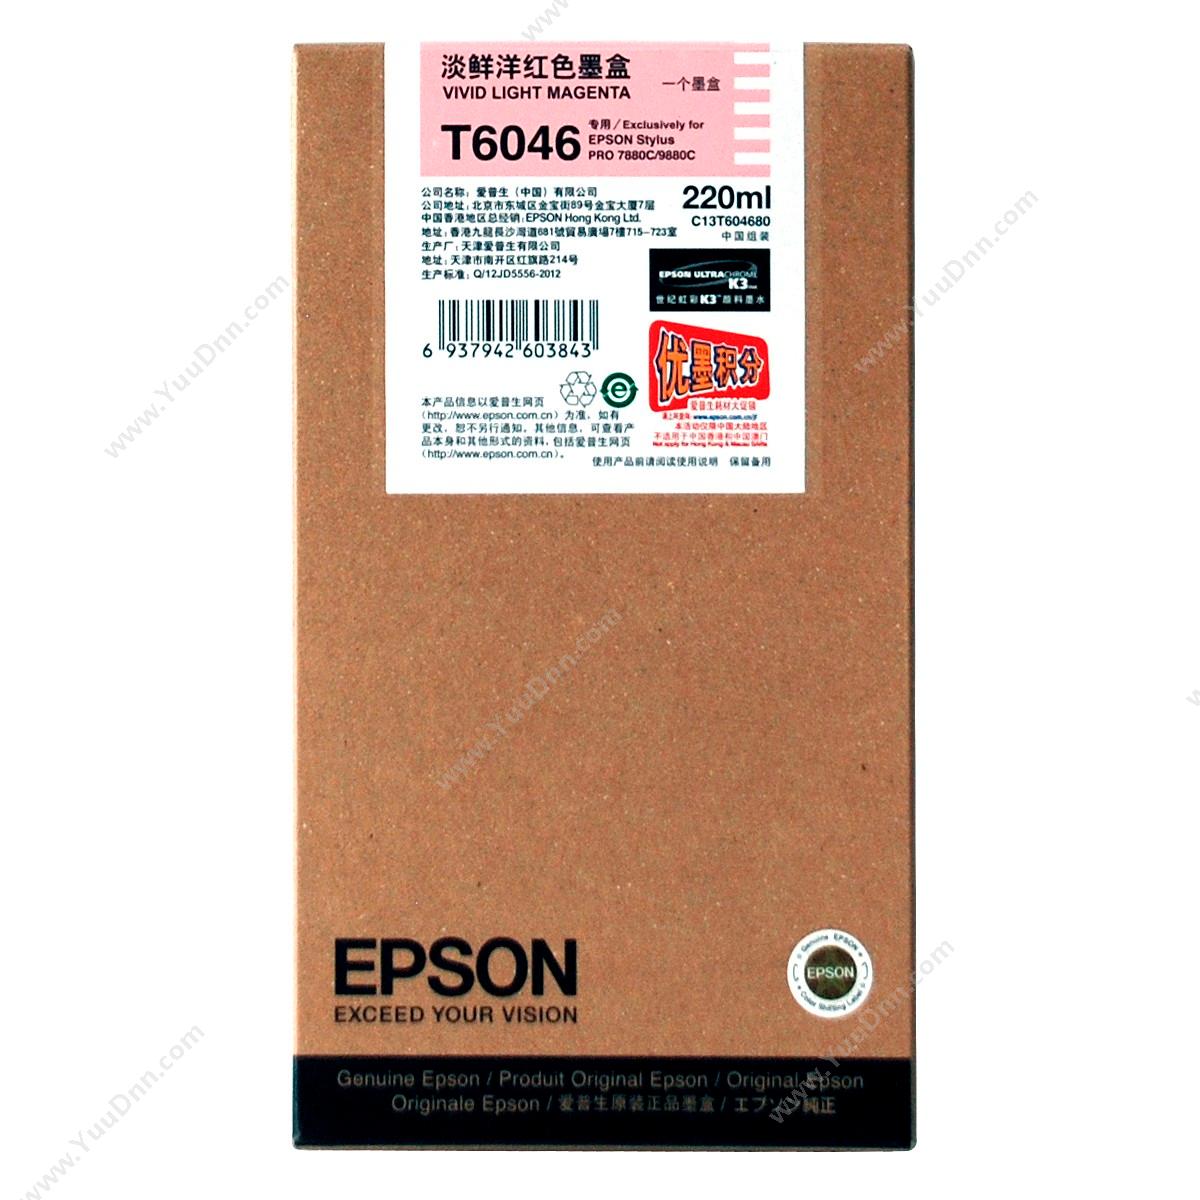 爱普生 Epson7880/9880VIVID浅红墨（C13T604680）墨盒